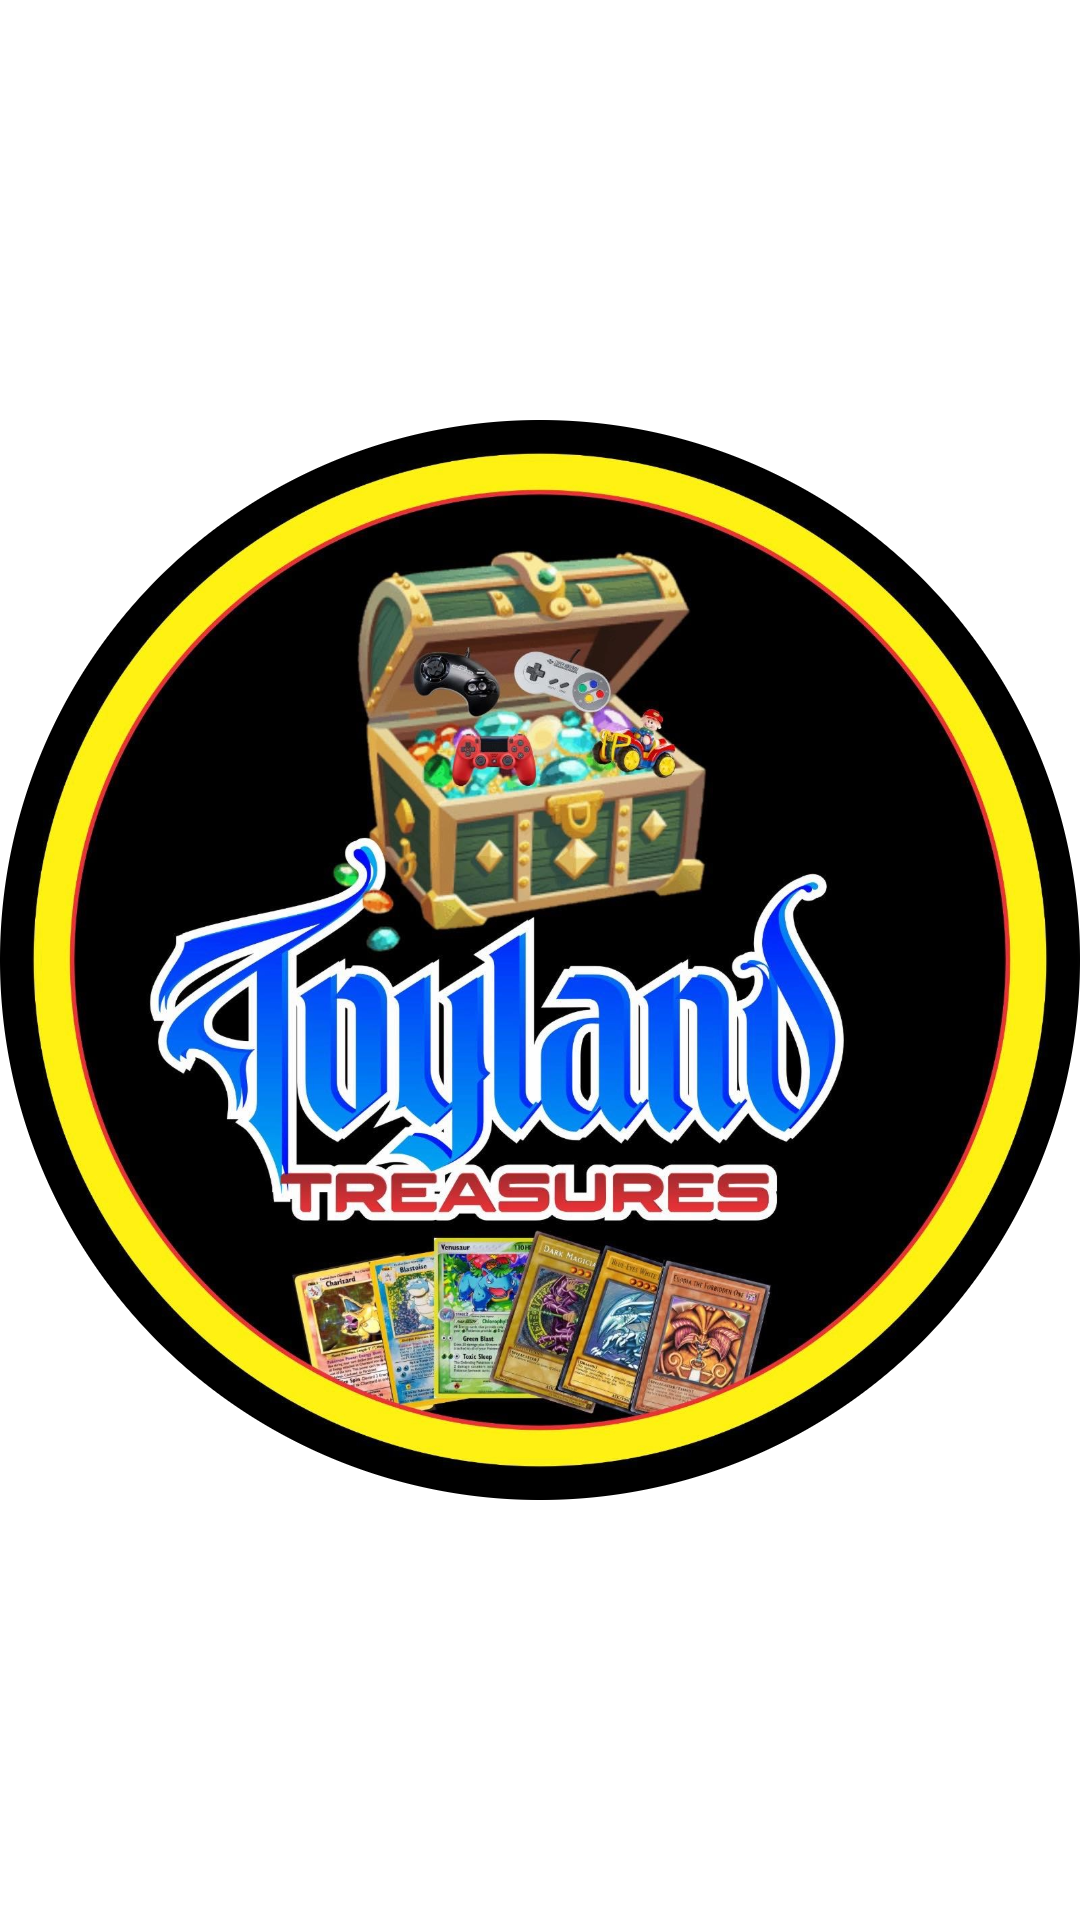 Toyland Treasures